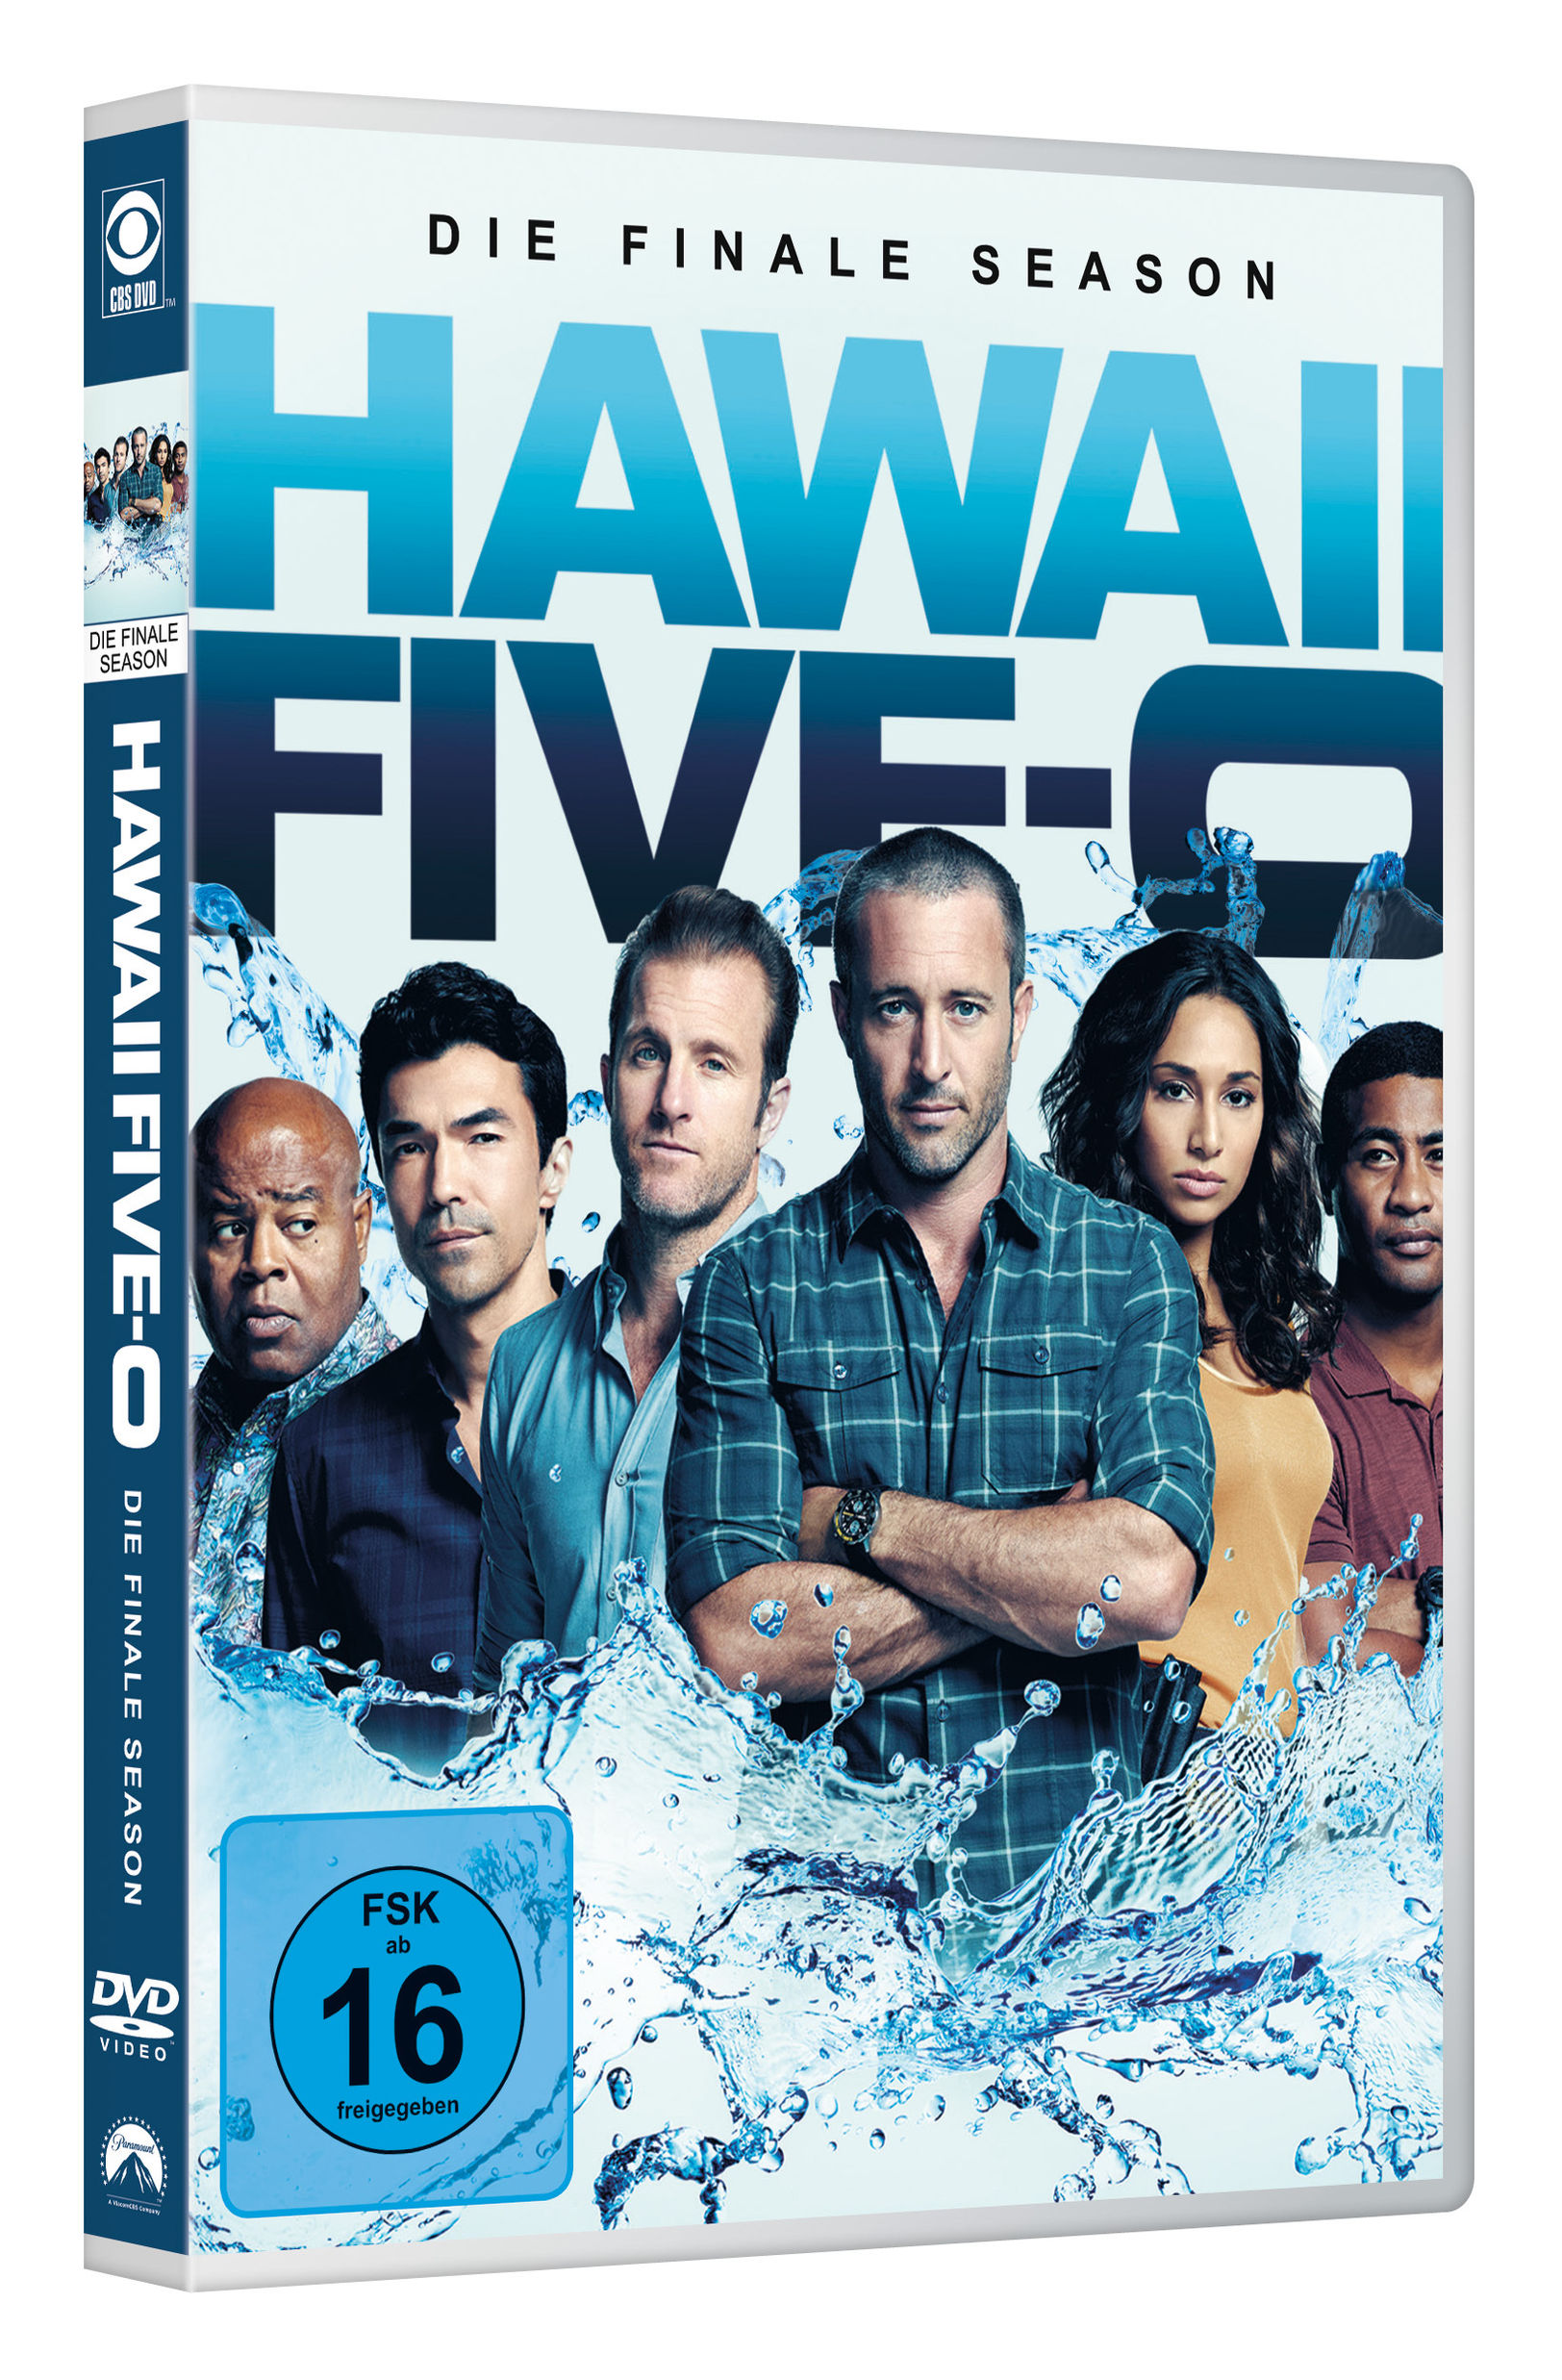 Hawaii Five-0 - Season 10 DVD bei Weltbild.de bestellen